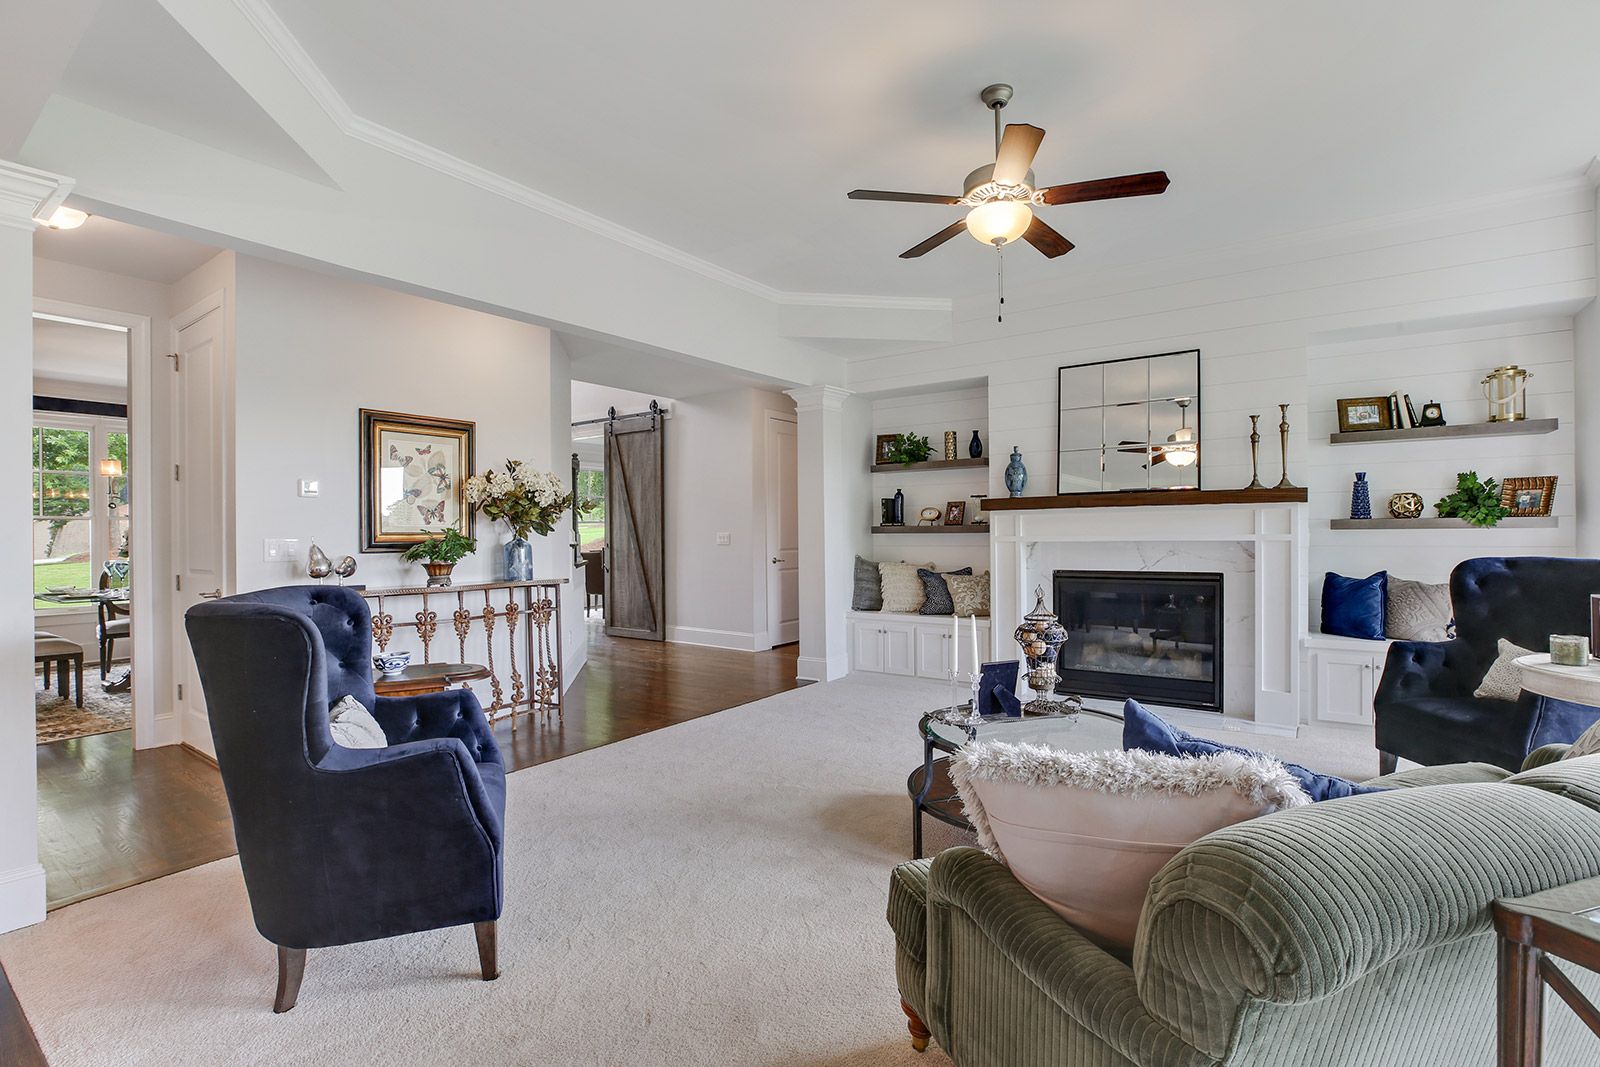 Harcrest Homes Interior Design Showcases Top Design Trends in Living Room